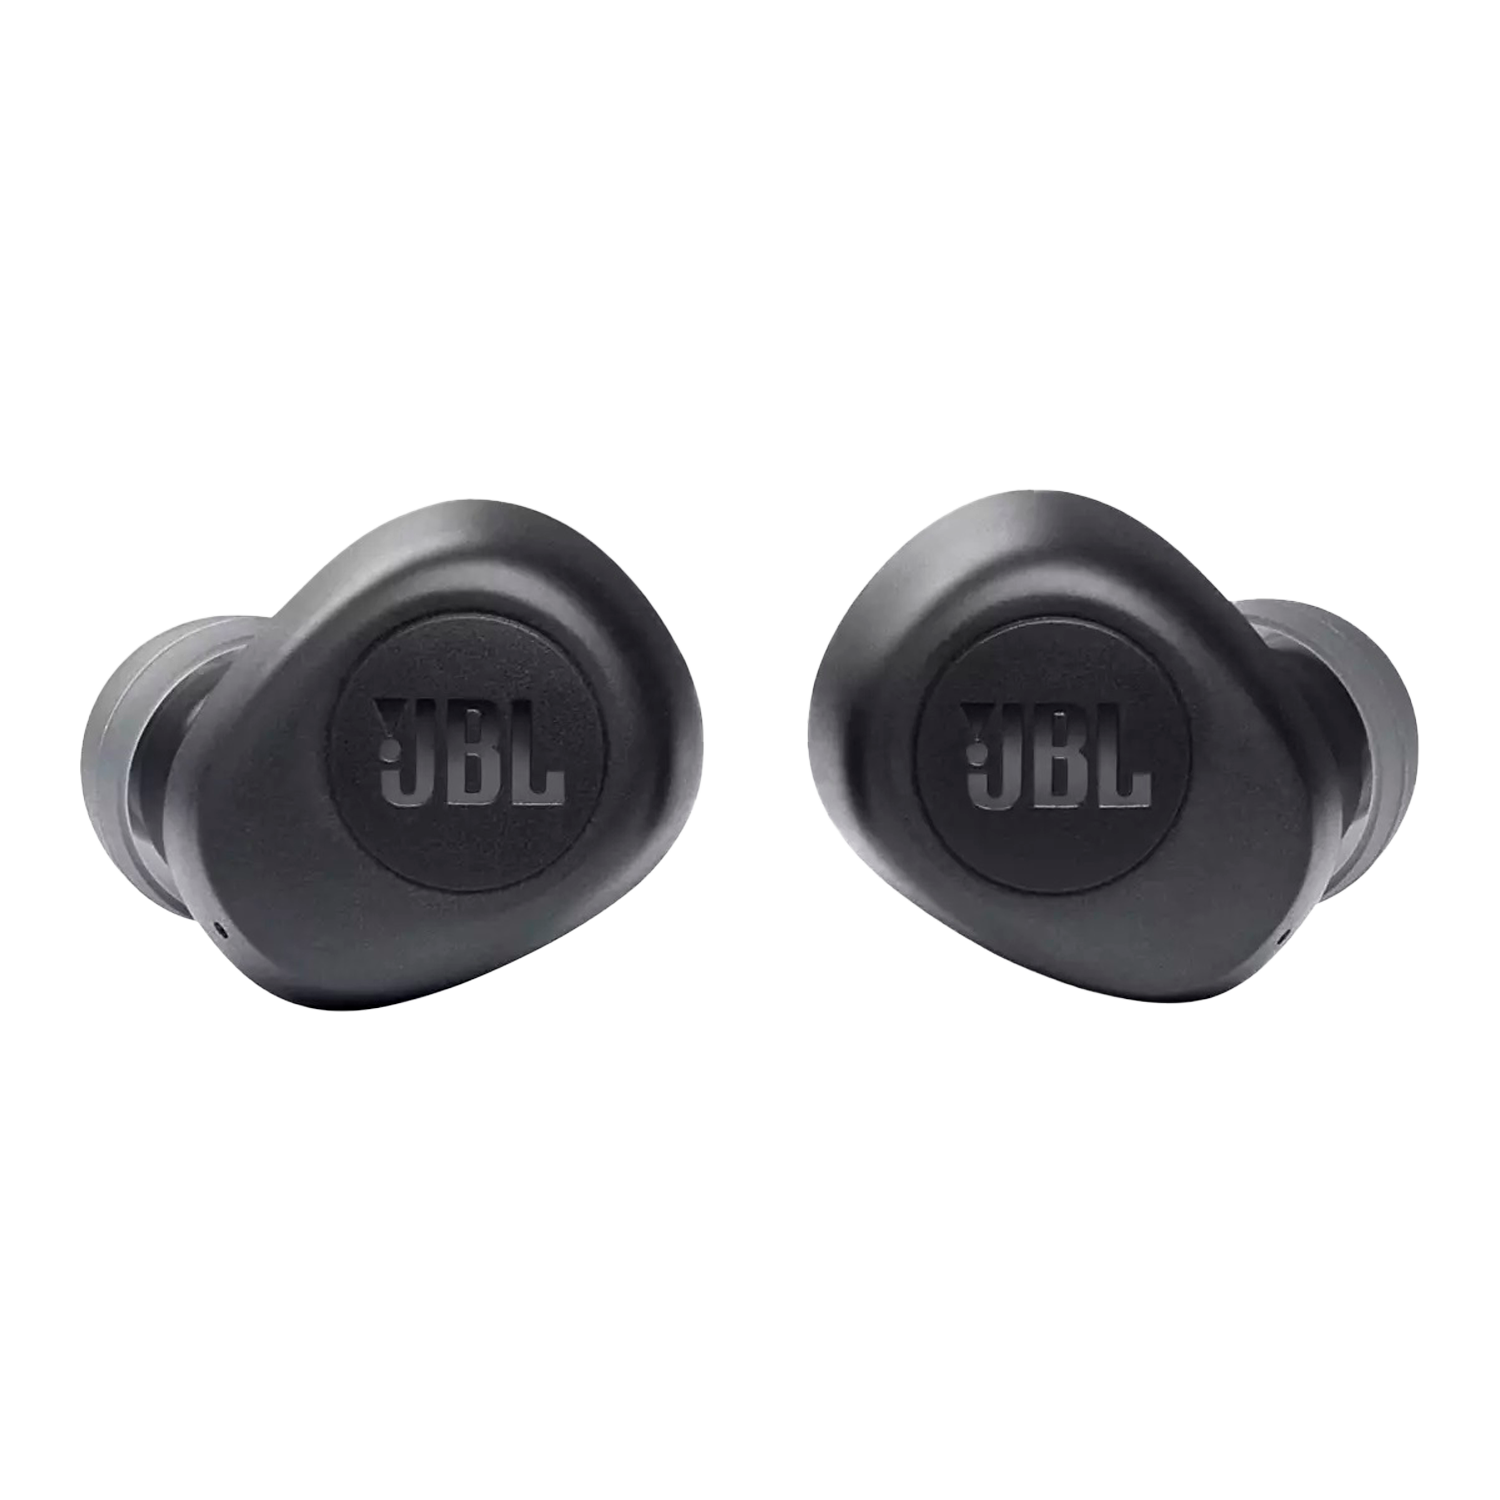 Fone de Ouvido JBL Vibe 100 TWS / Bluetooth - Preto